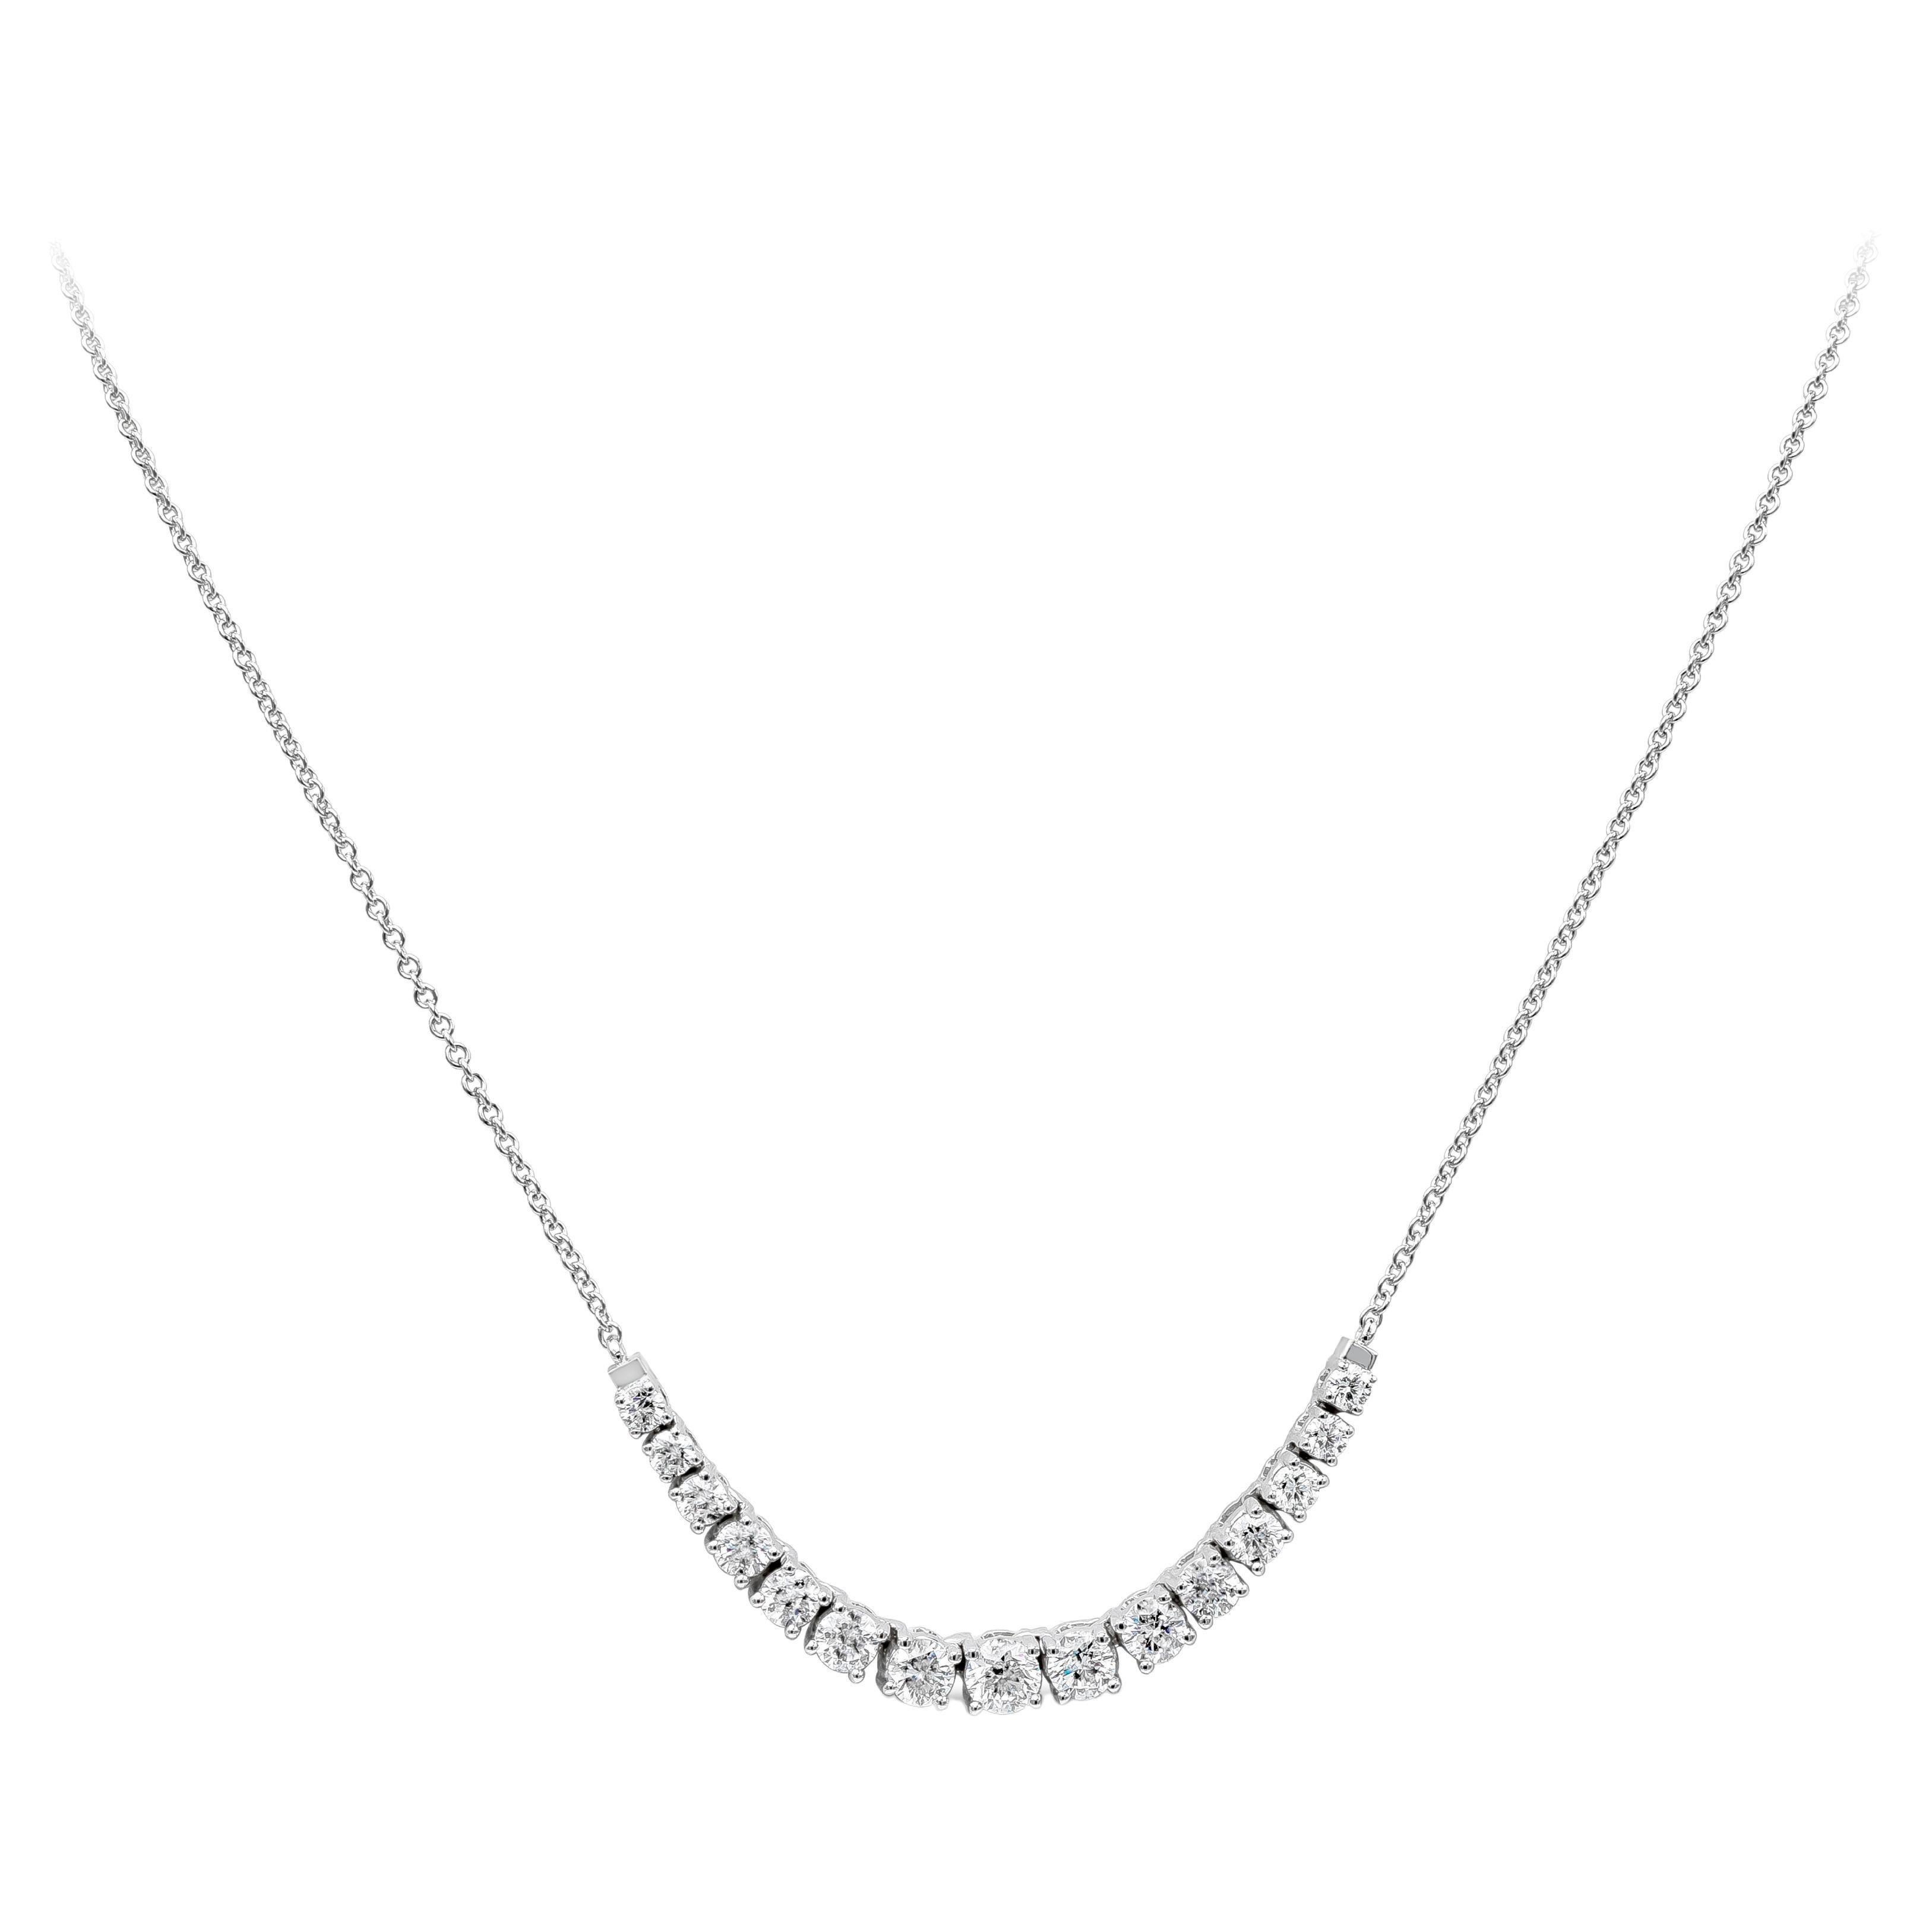 Roman Malakov 2.70 Carats Total Graduating Round Diamond Line Pendant Necklace For Sale